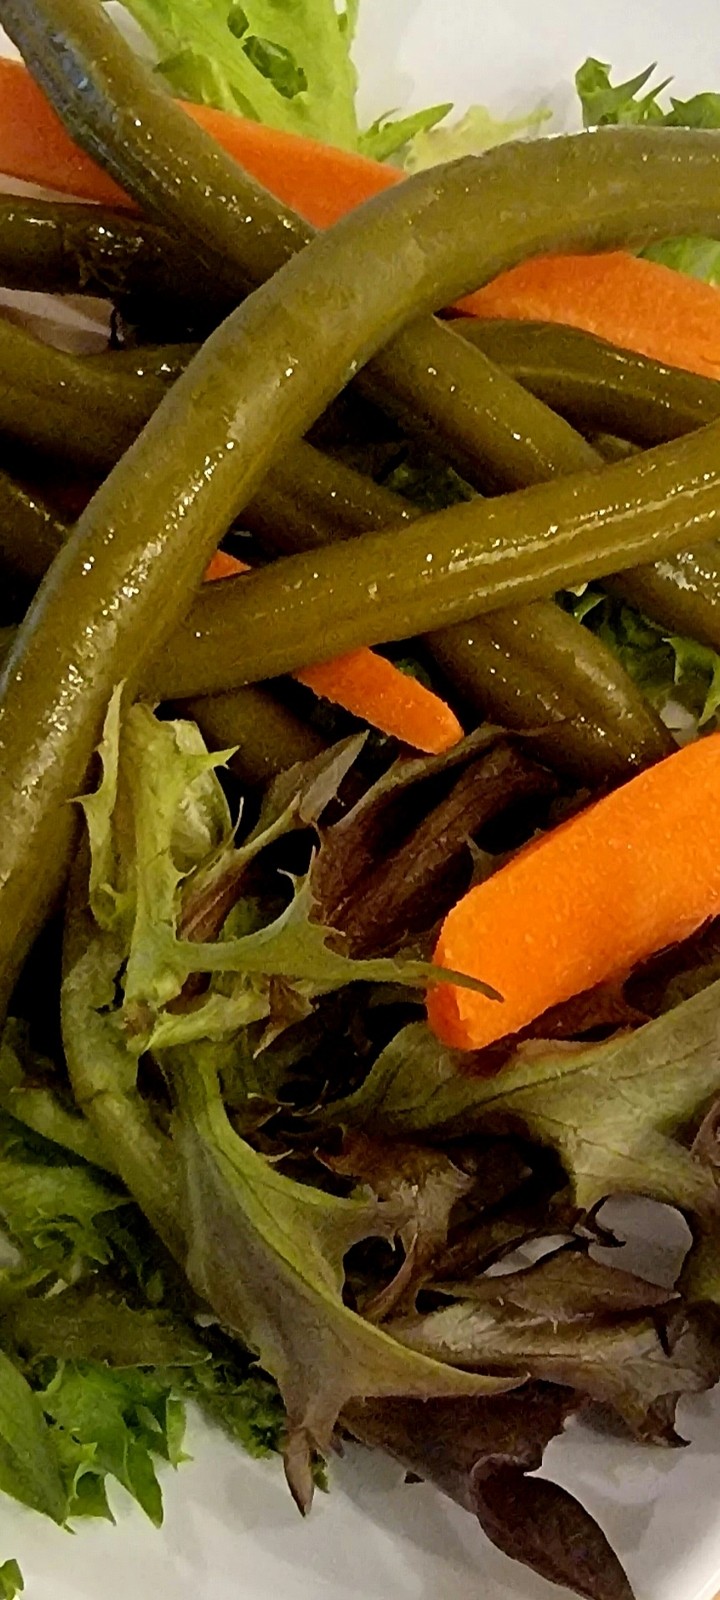 pickled veggies 🌱